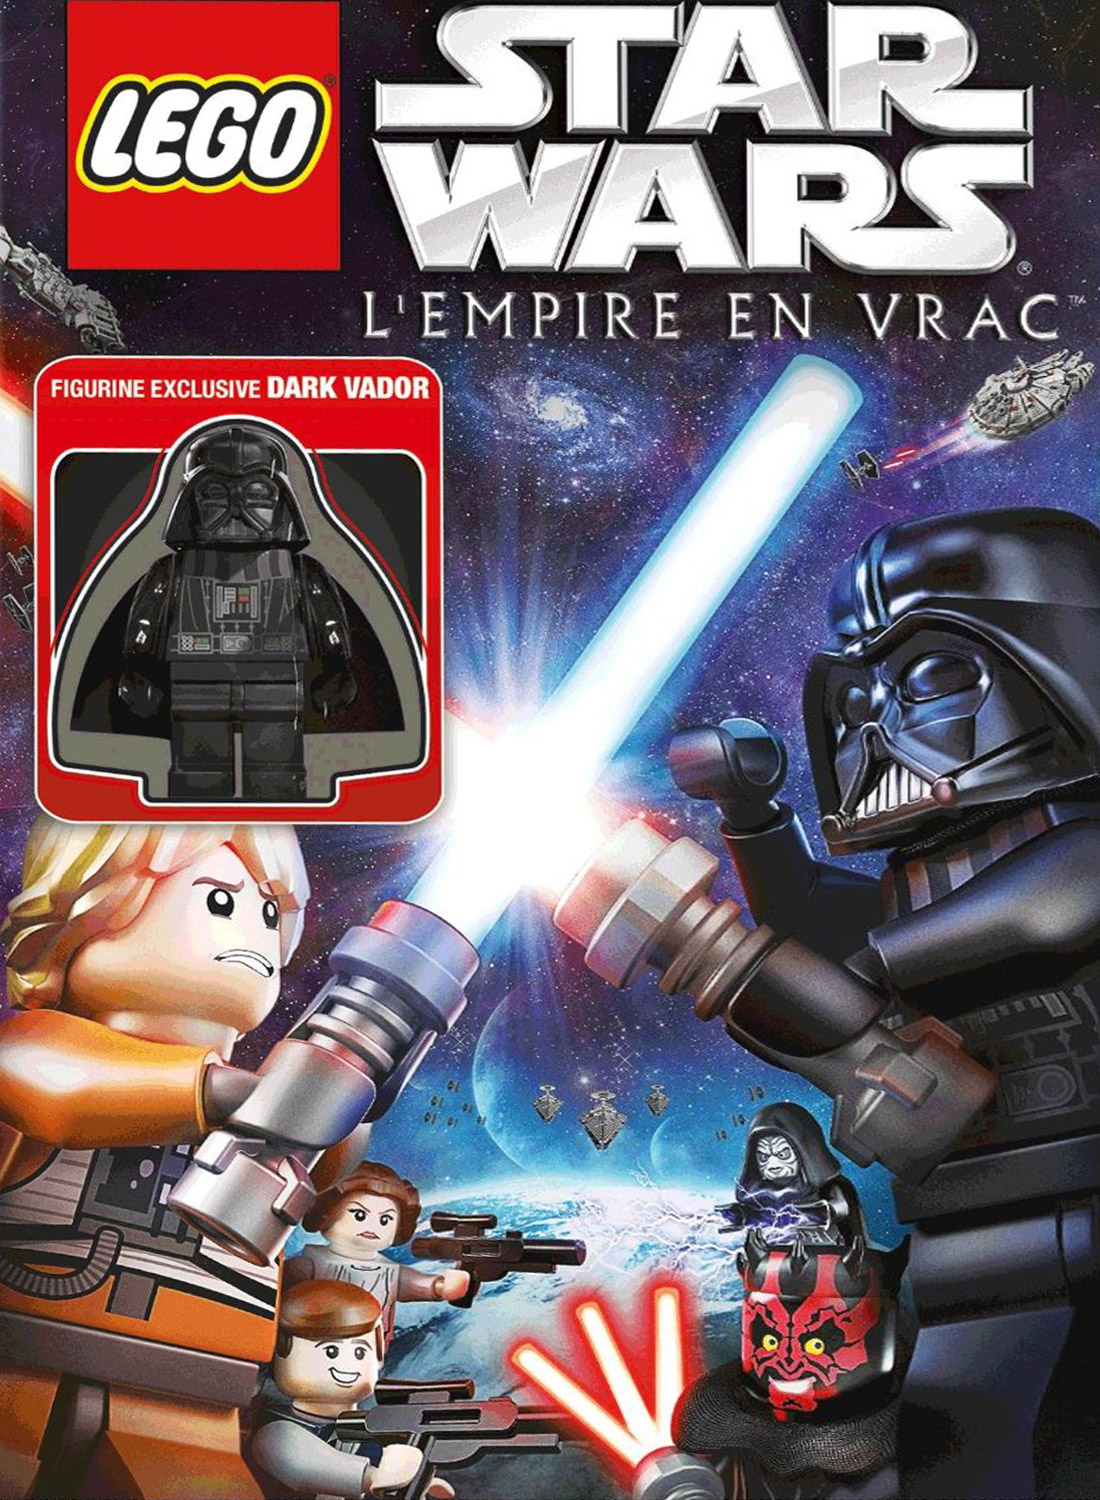 Lego Star Wars - L'Empire en vrac